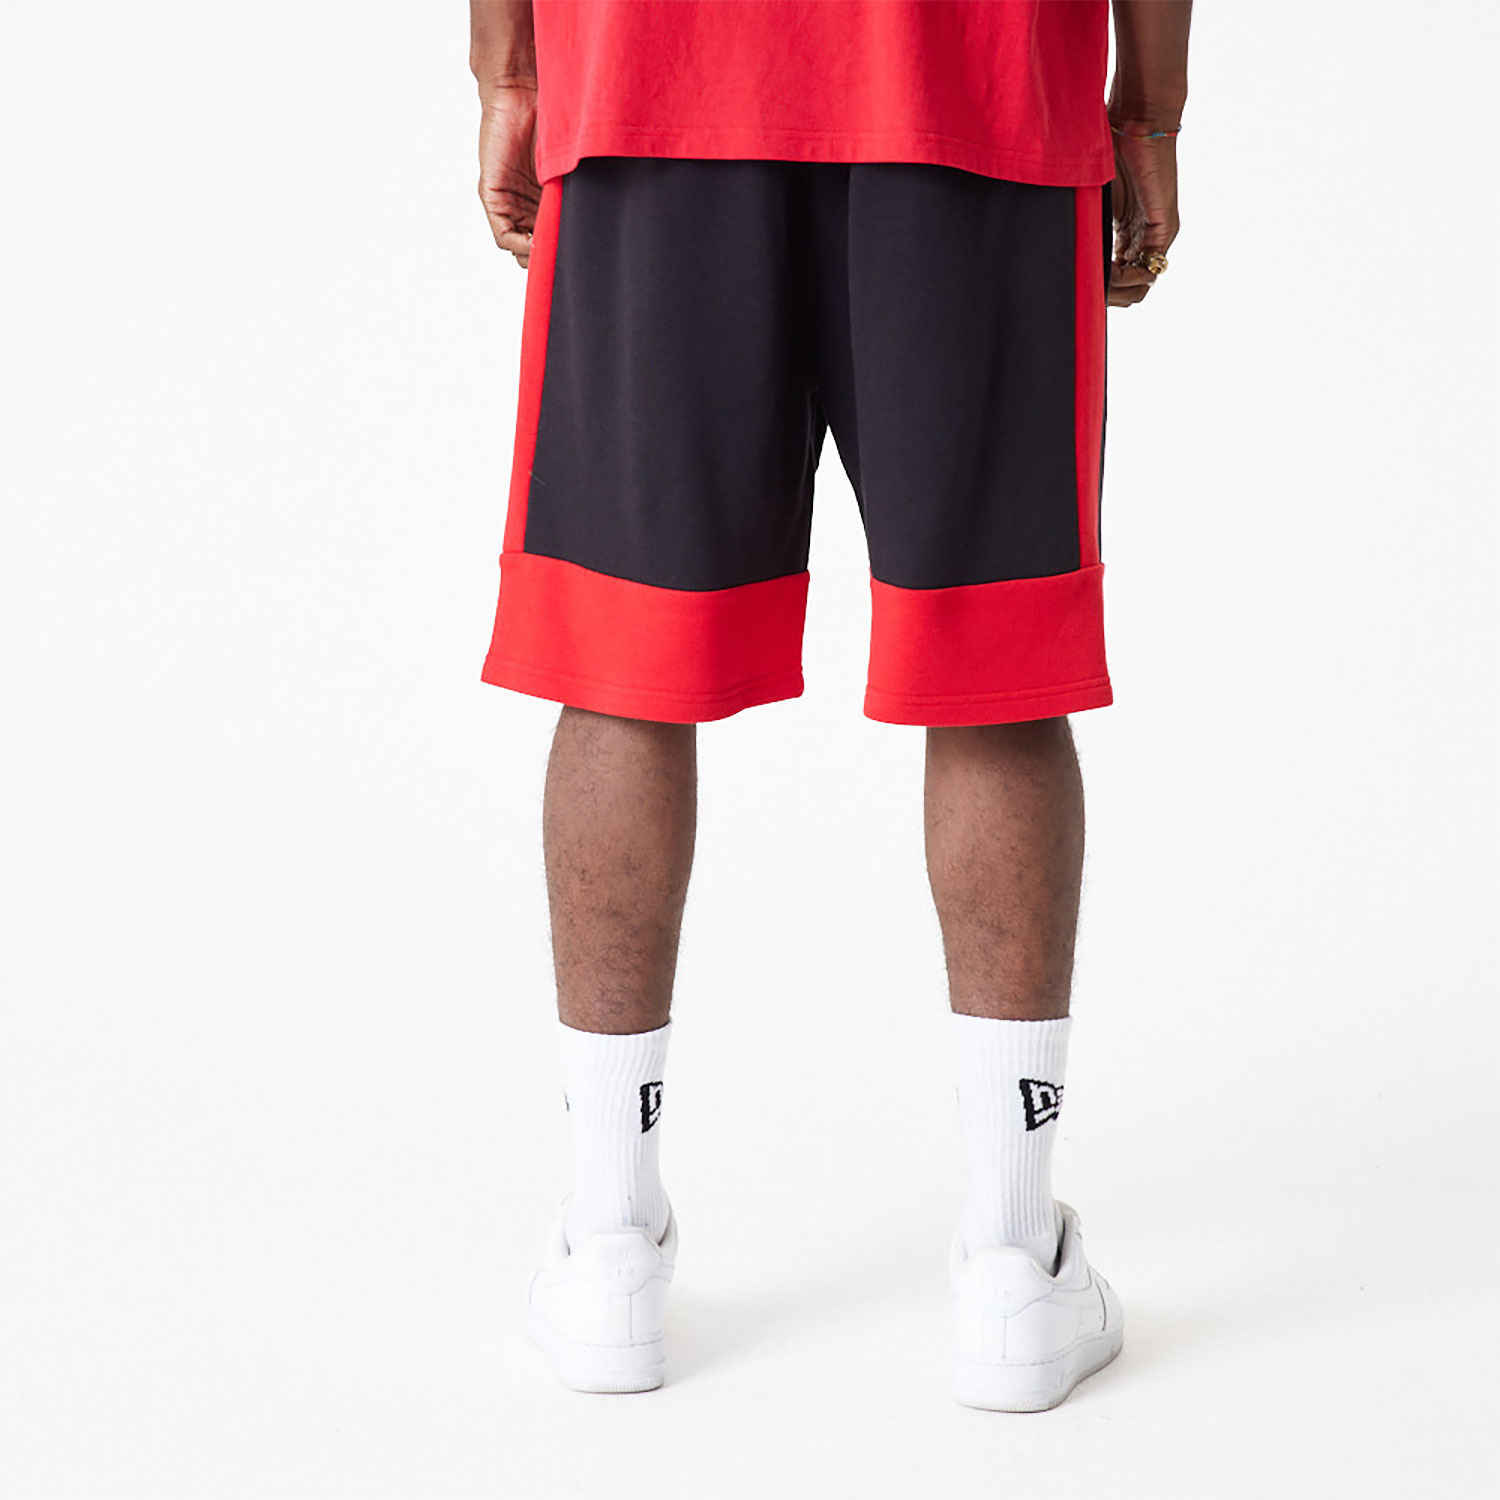 Chicago Bulls NBA Colour Block Black Shorts